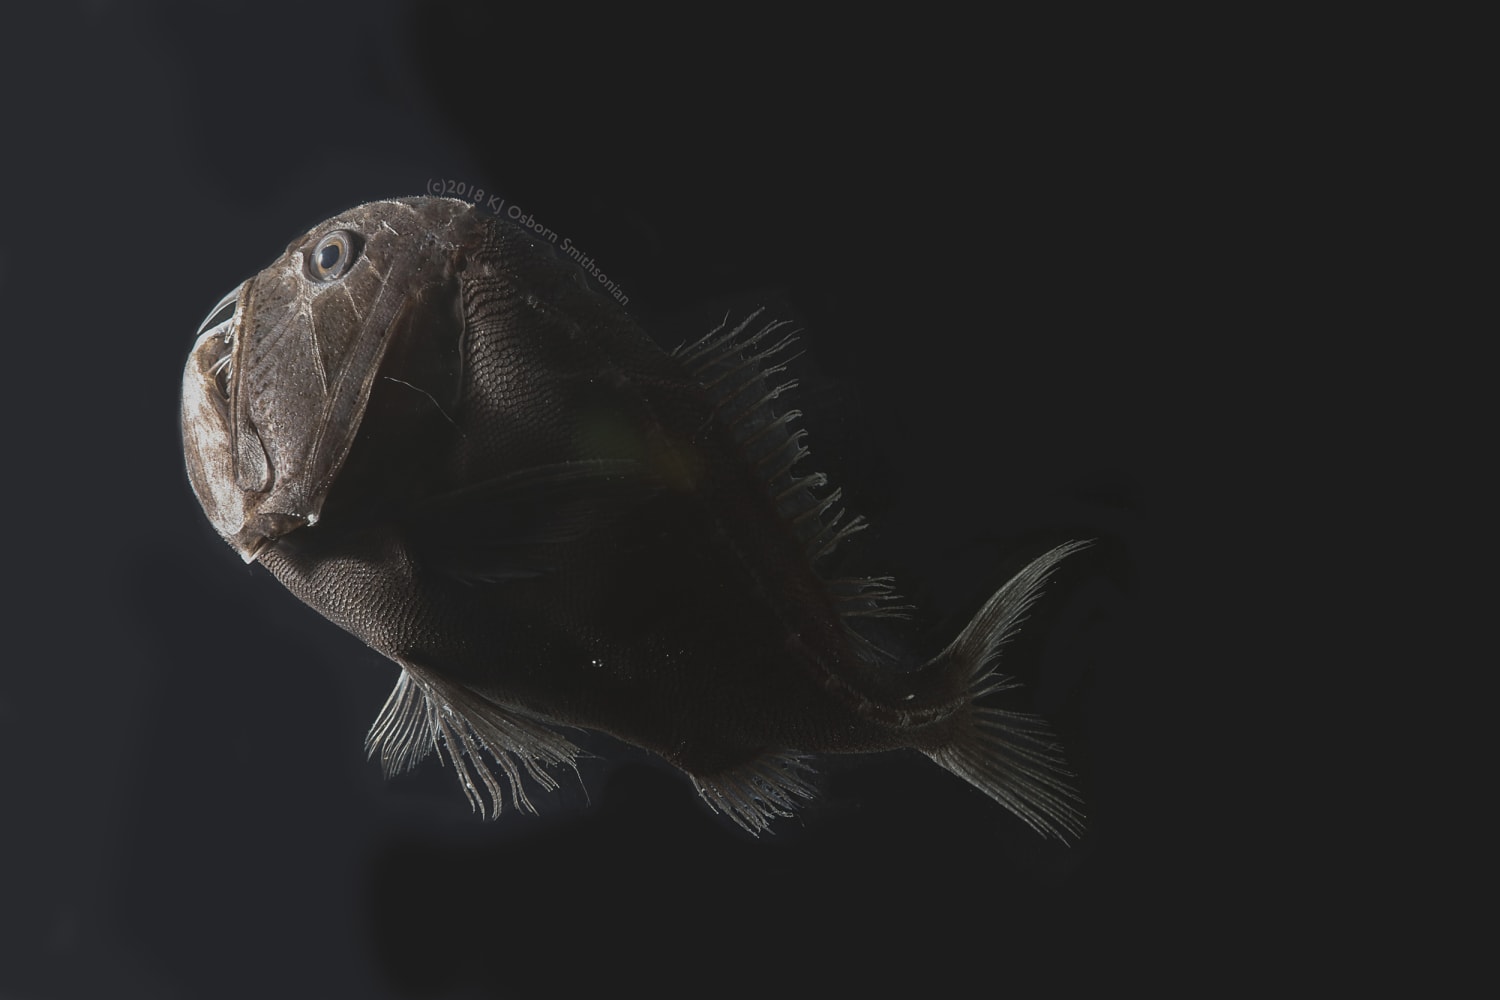 Meet the 'ultra-black' fish of the ocean's depths